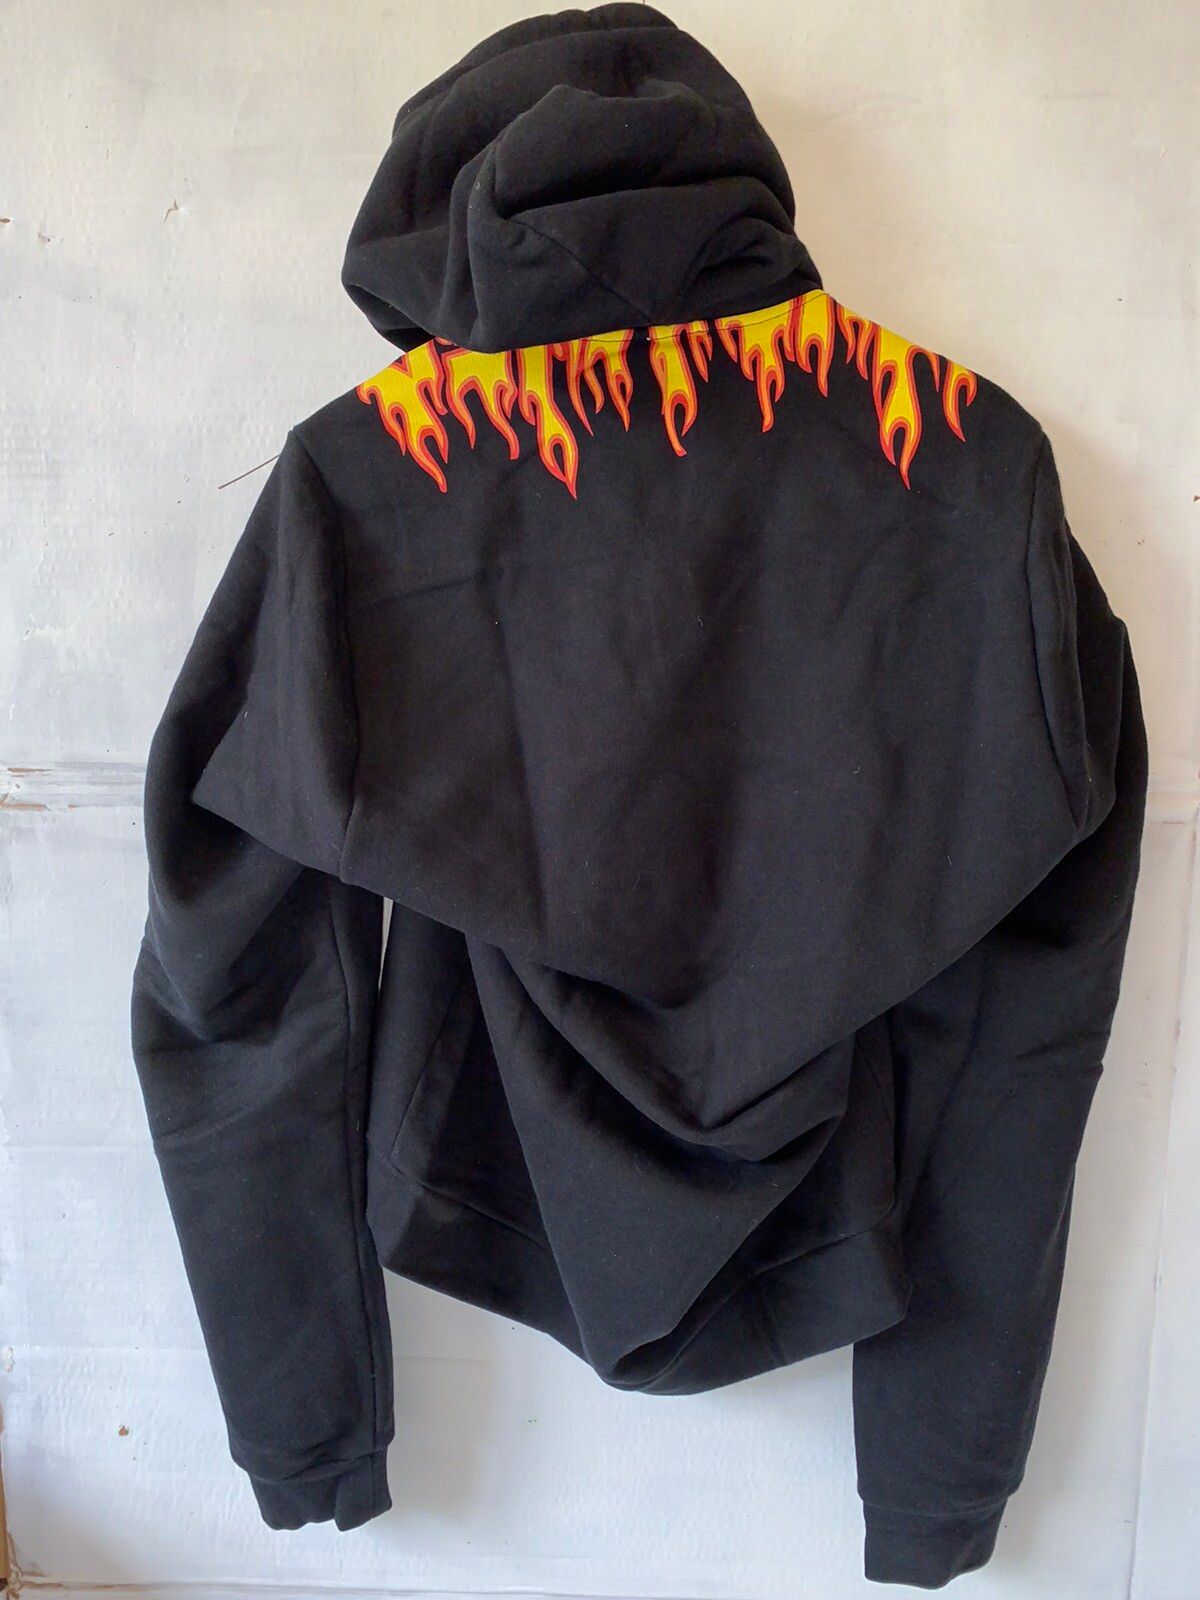 Vetements Vetements rare flame thrasher font hoodie medium with tags Size US M / EU 48-50 / 2 - 3 Thumbnail